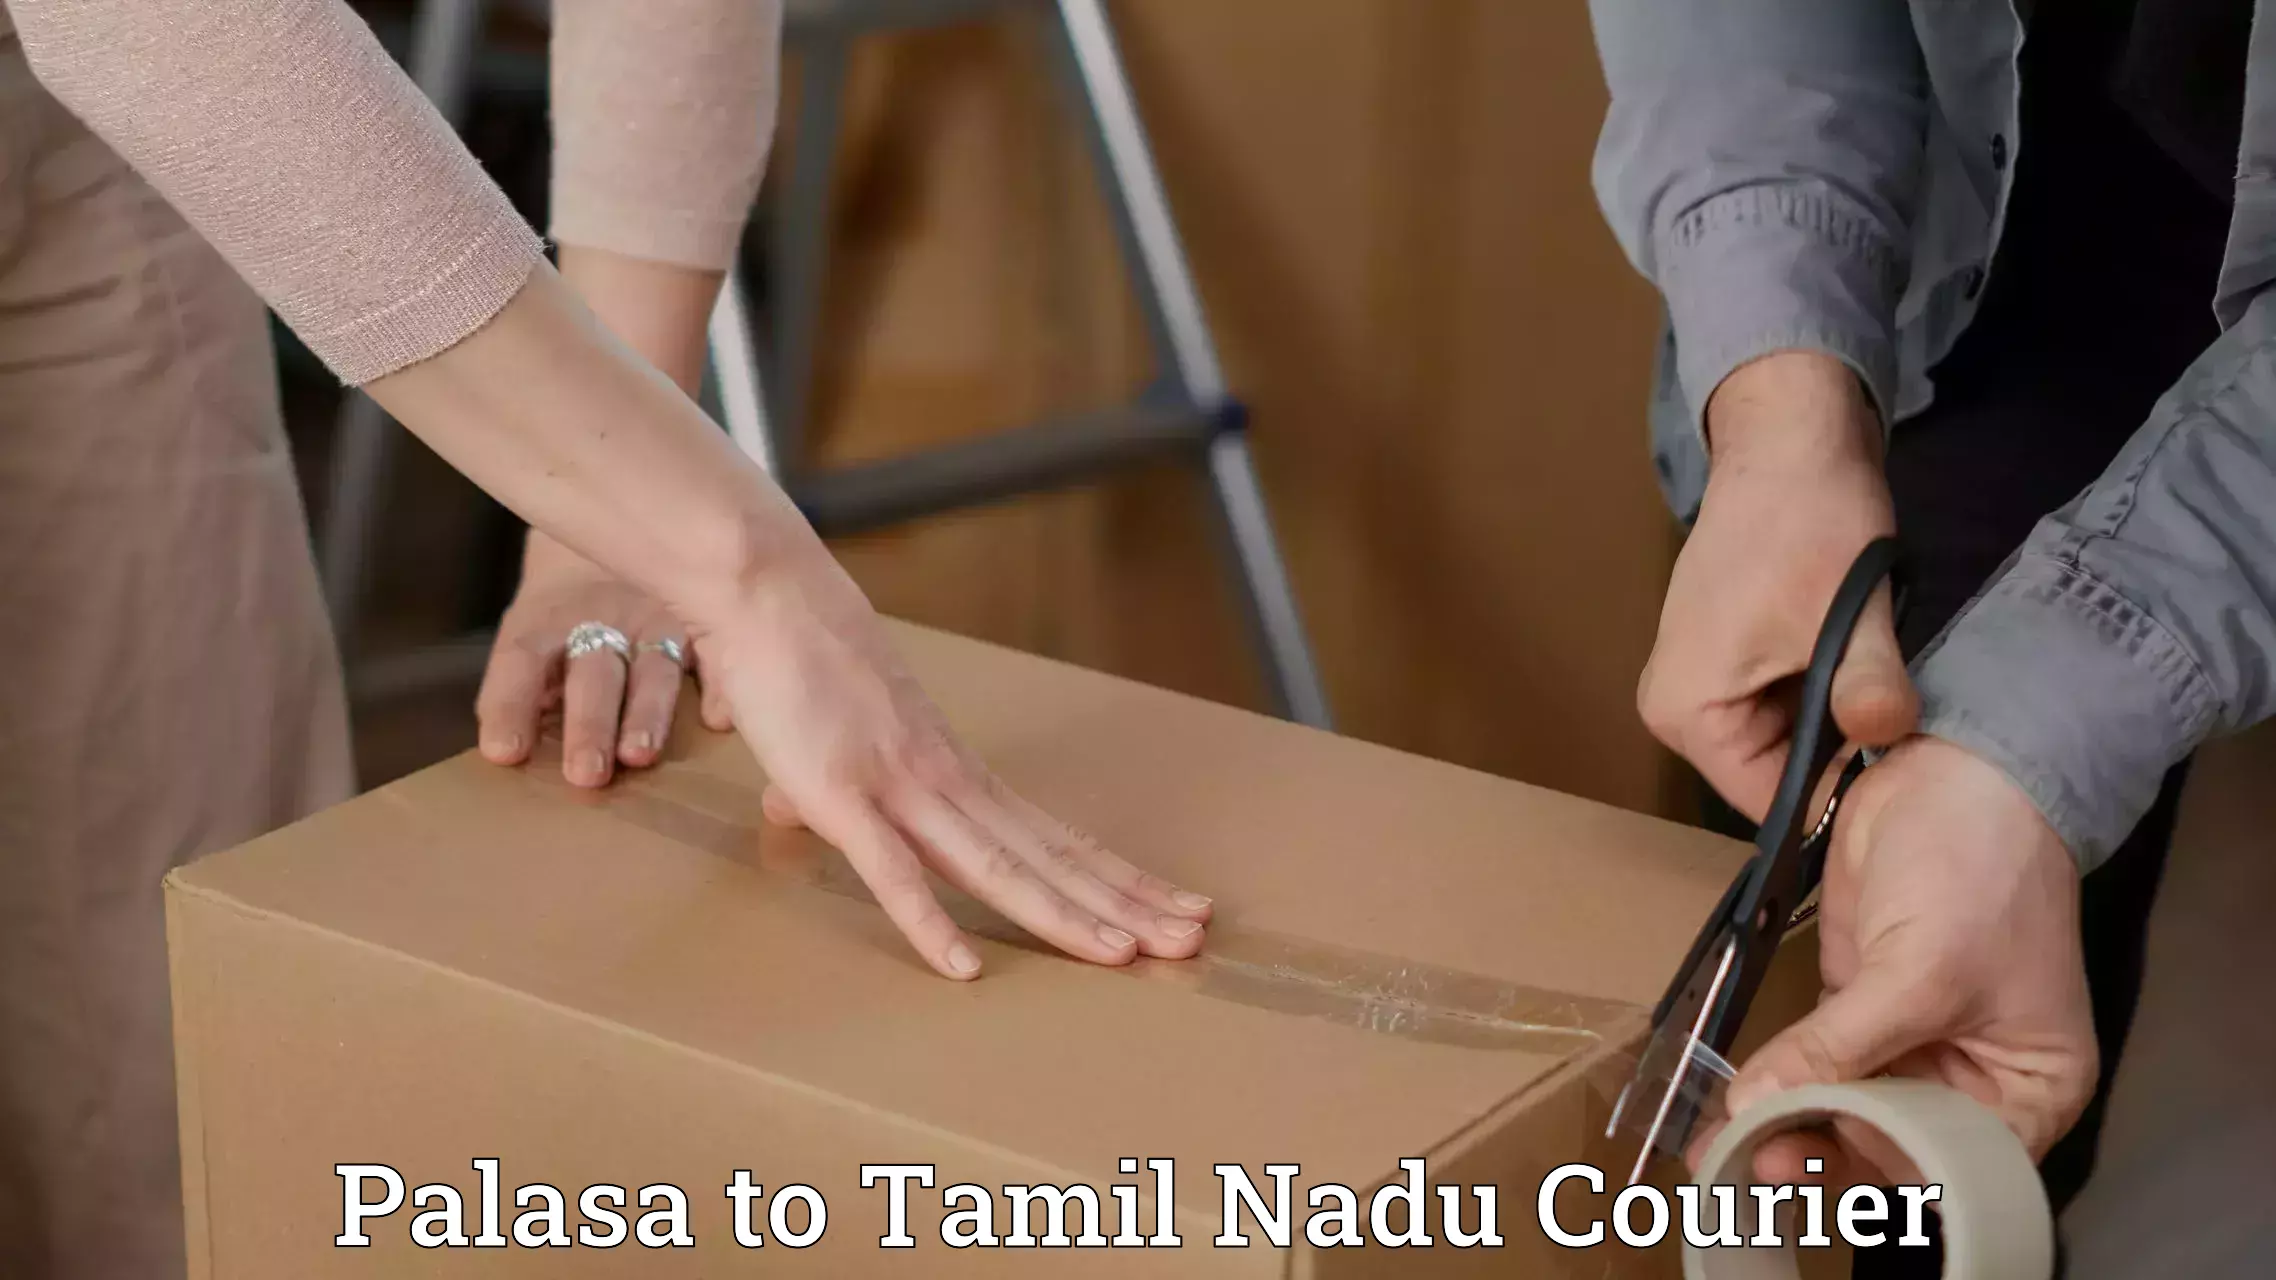 User-friendly delivery service Palasa to Tamil Nadu